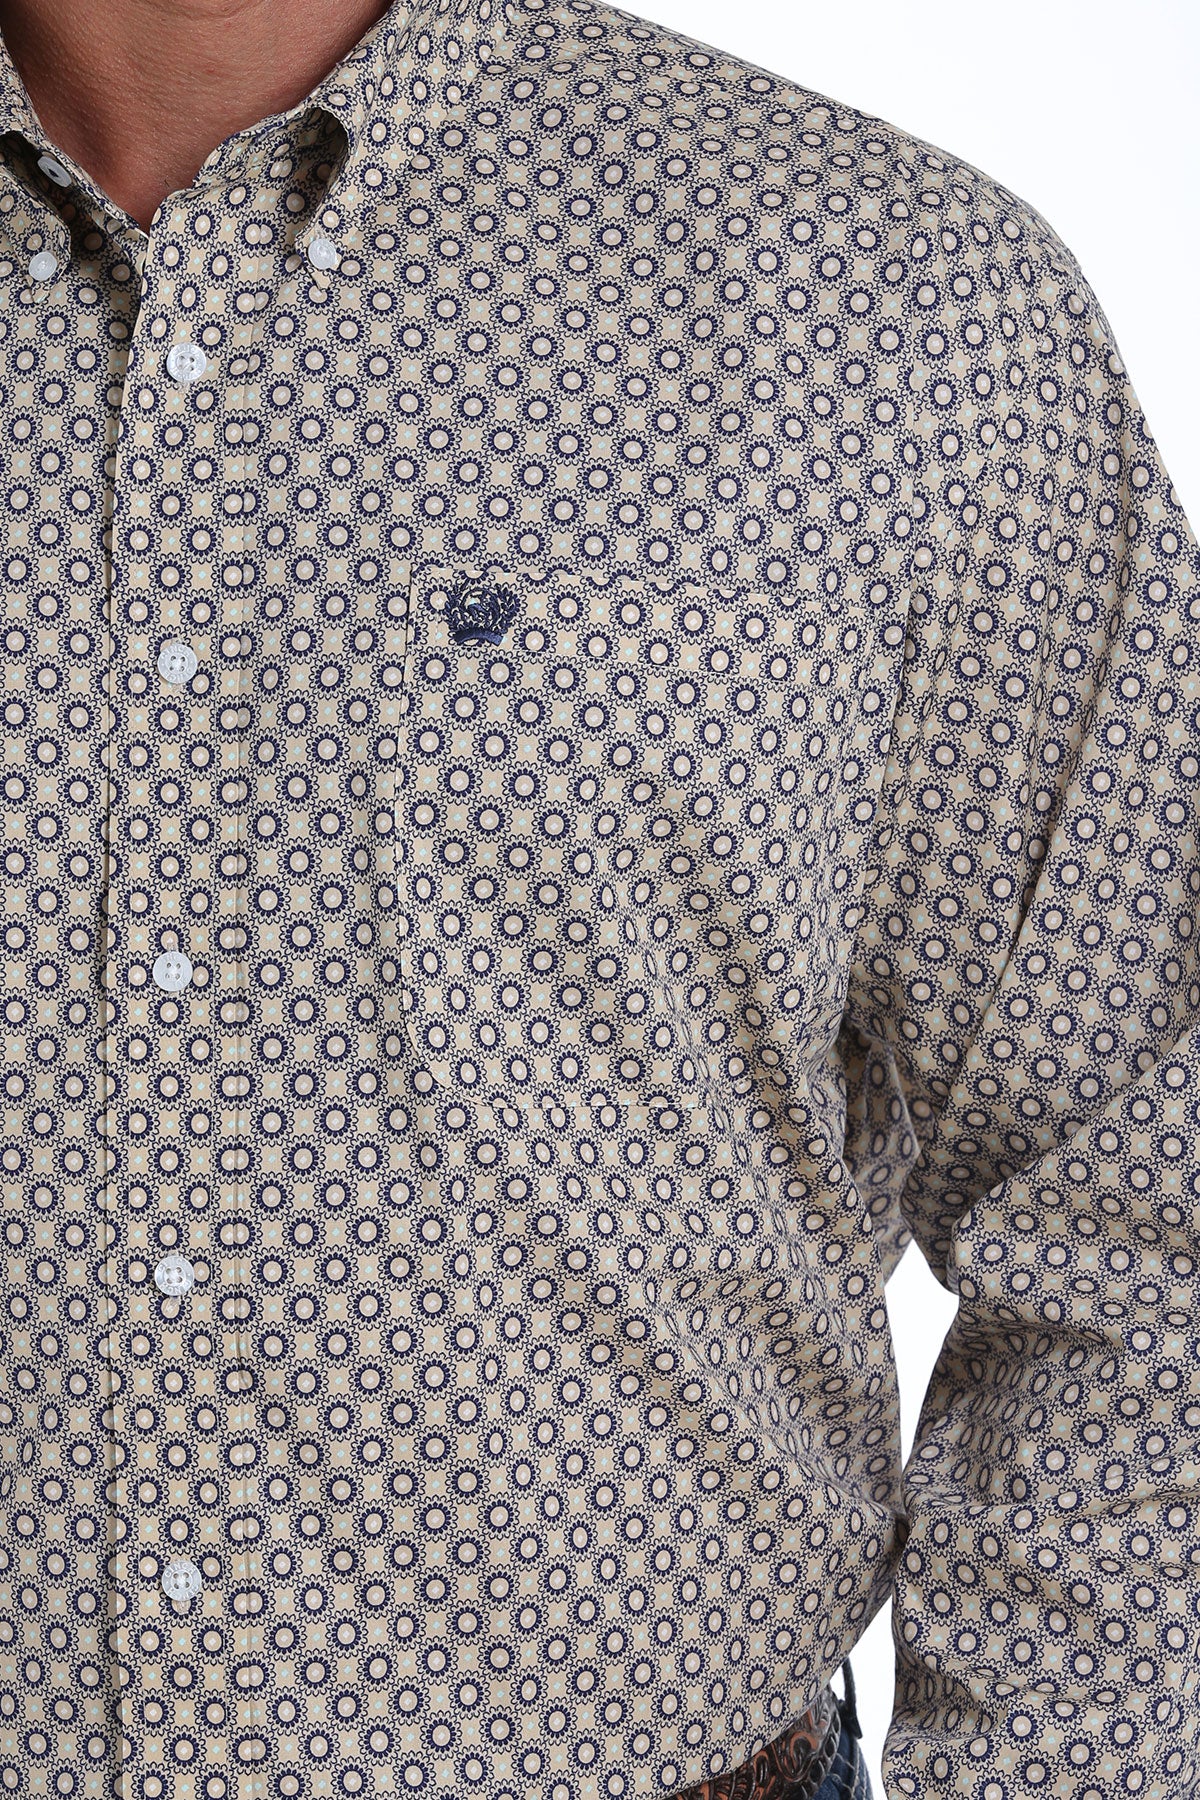 Cinch Men's Printed Camel Plan Weave Button-Down Shirt